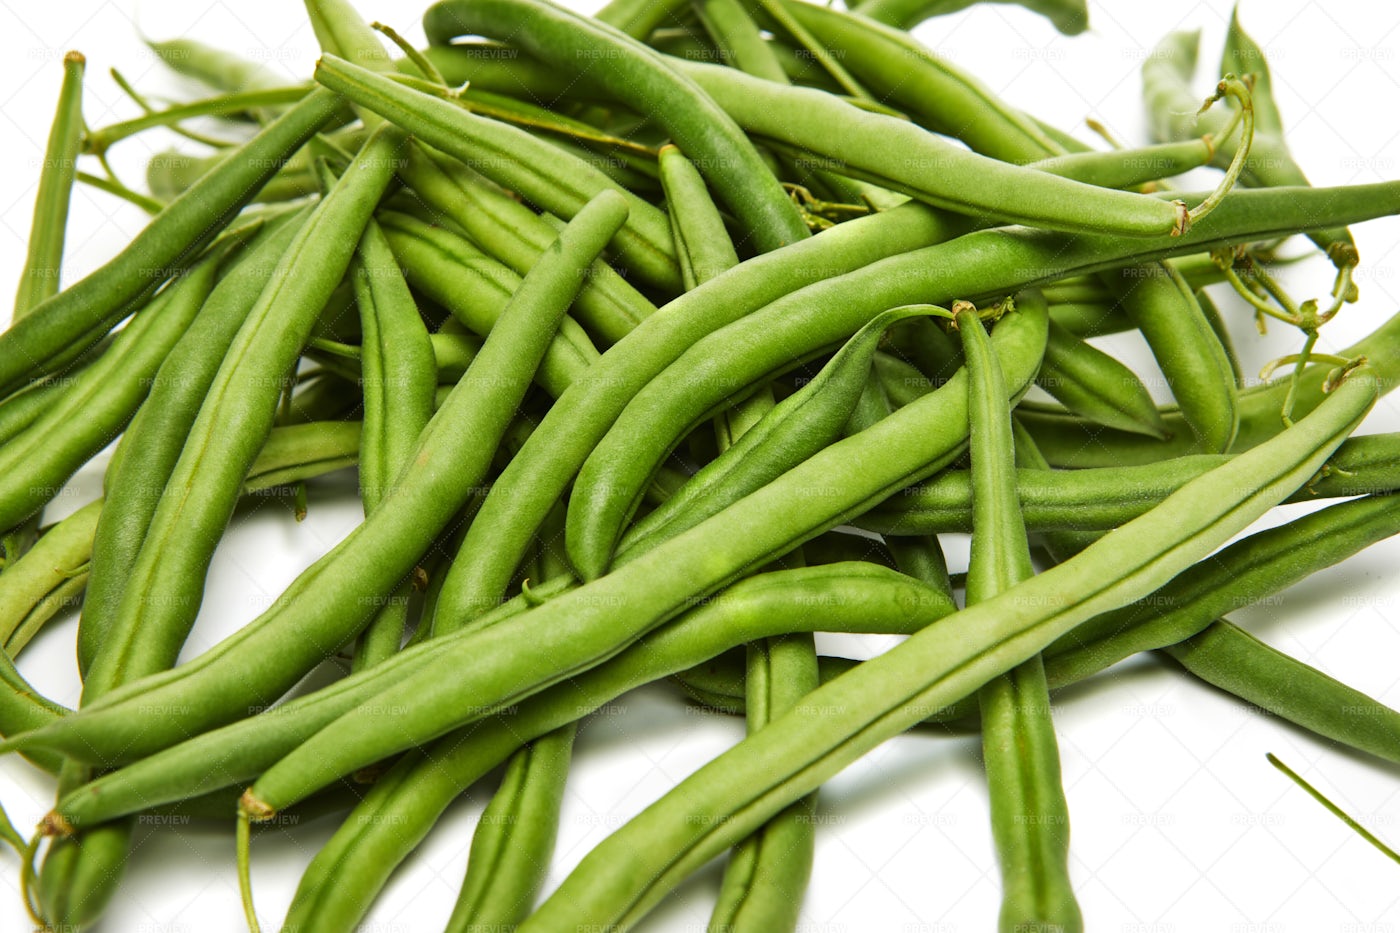 Fresh Green Beans Isolated: Stock Photos